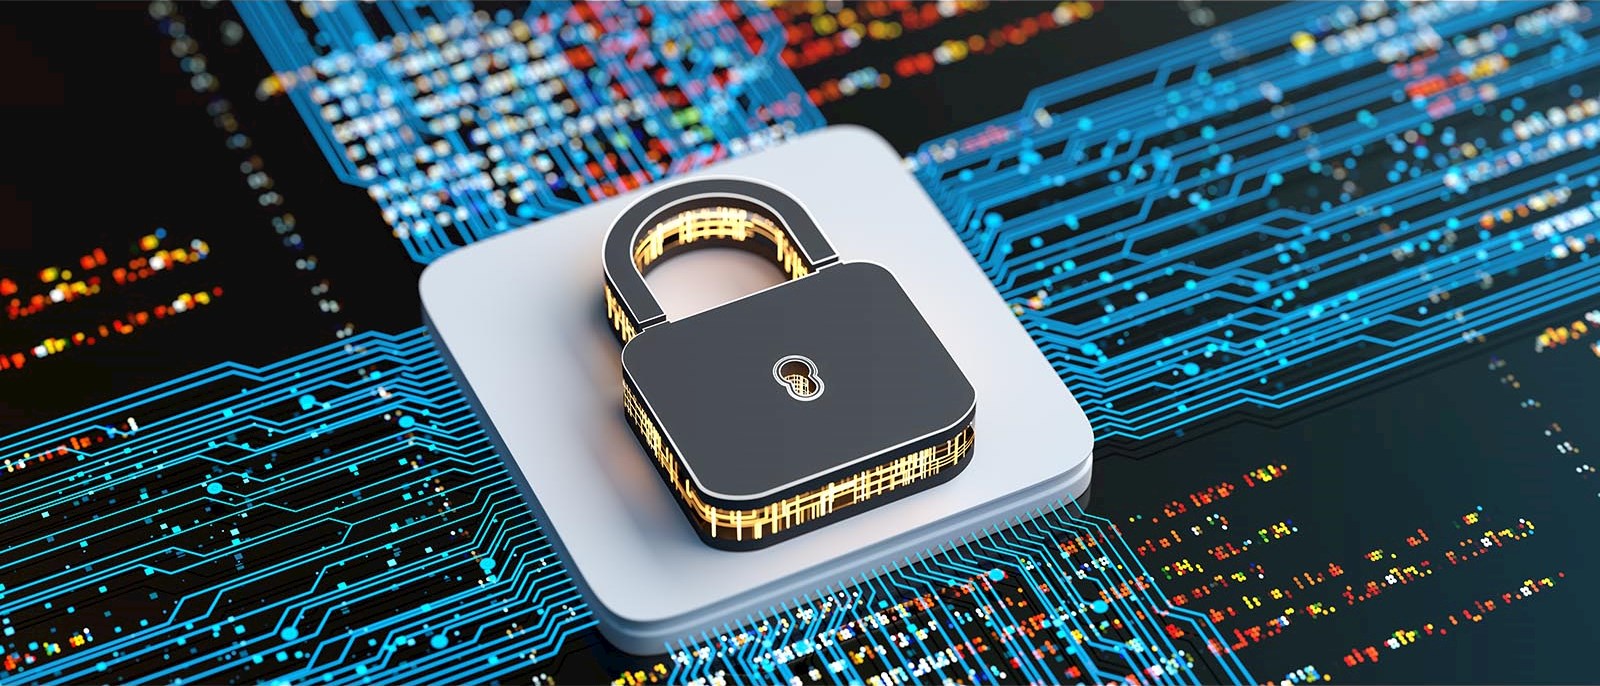 lock cyber security ICAEW Corporate Financier news